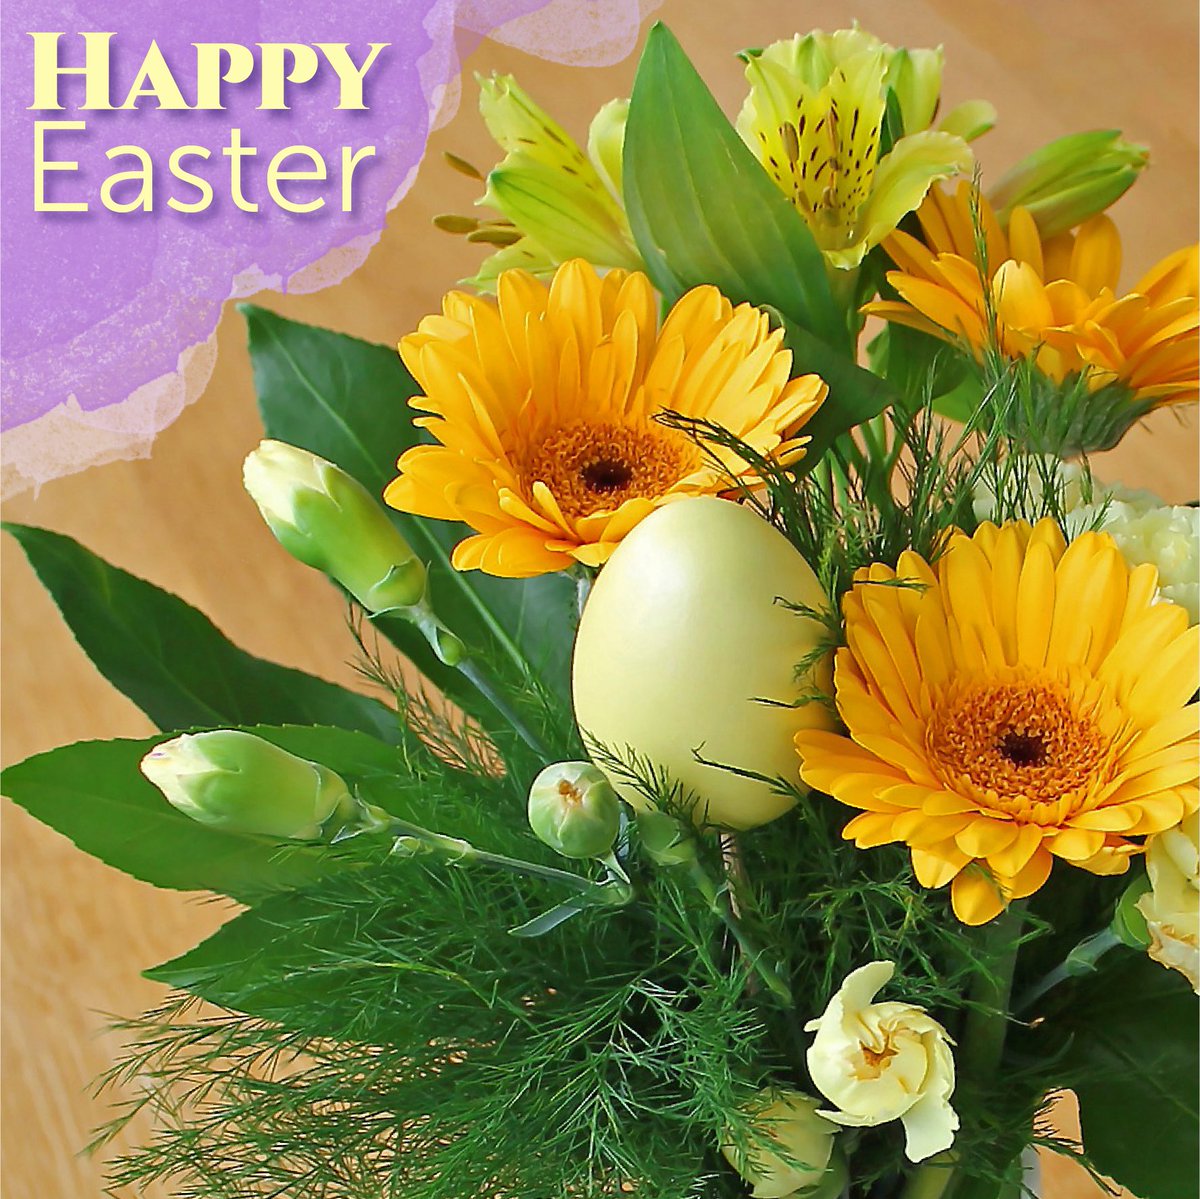 🥚🐇Happy Easter! #eastersunday #flowers #family #art #rabbit #easter #easterbunny #easterdecor #eastereggs #handmade #bunny #happyeaster #love #easterbasket #pasqua #homedecor #lahaciendaflowers